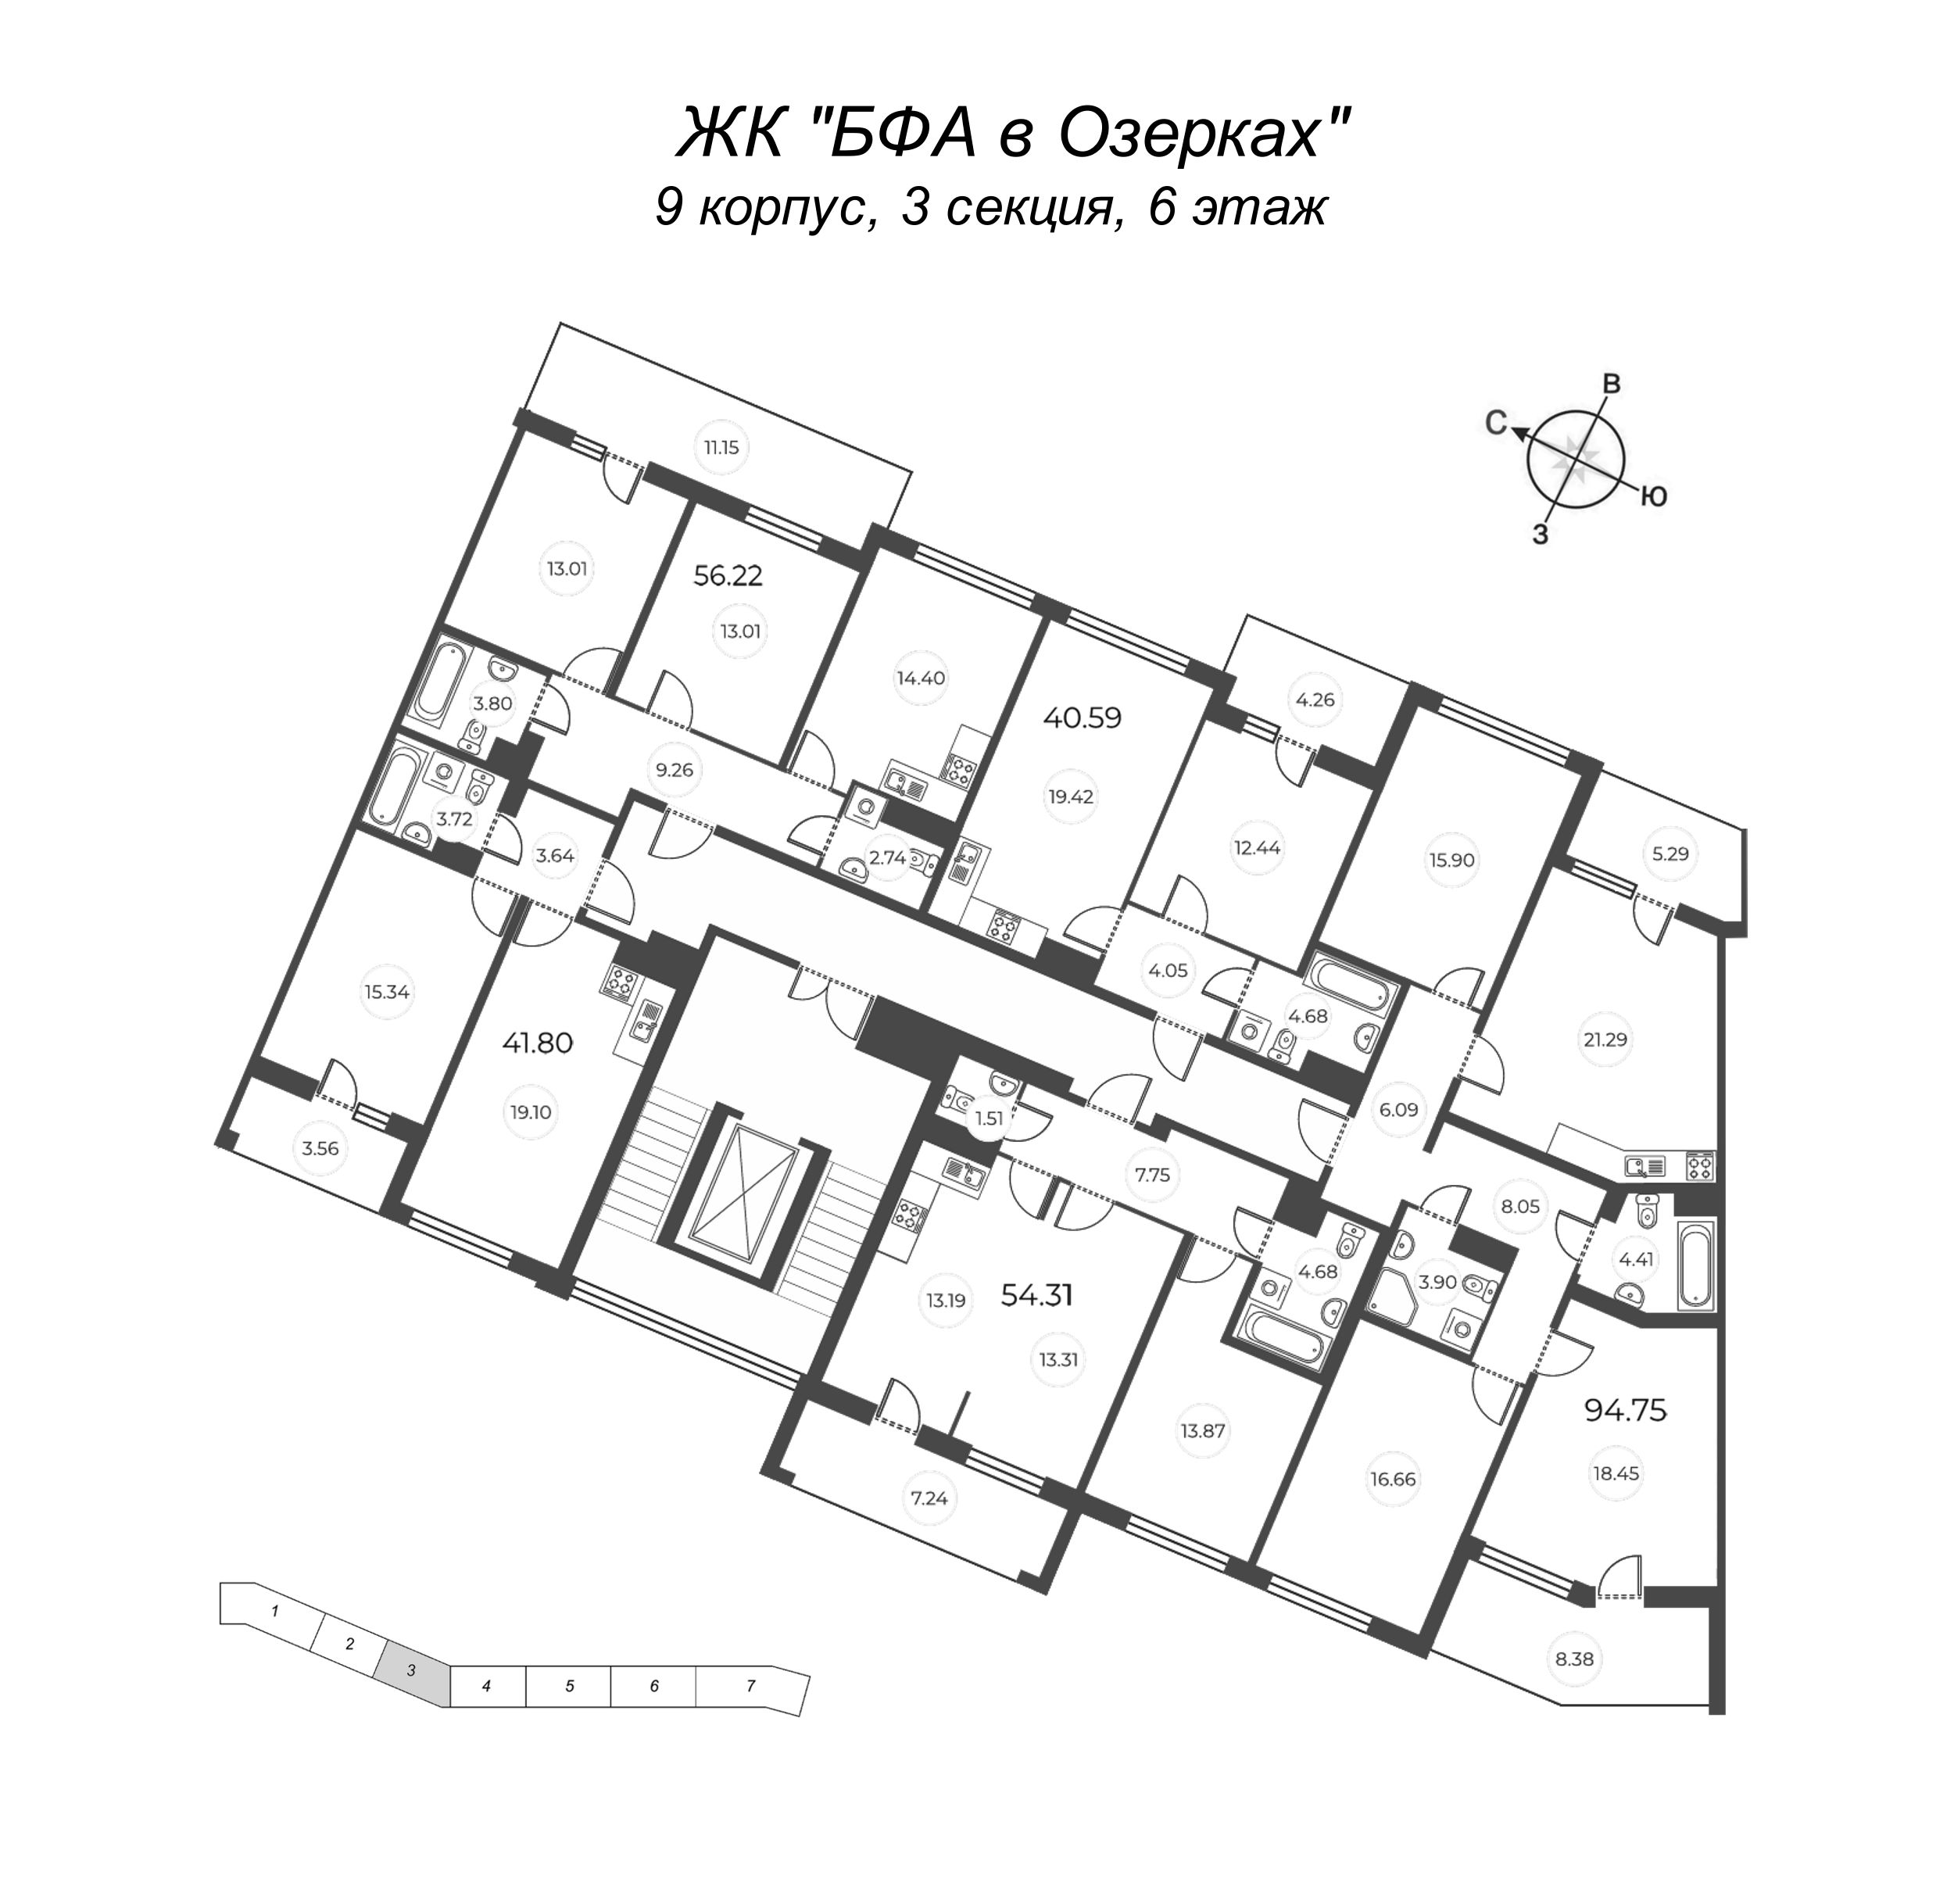 4-комнатная (Евро) квартира, 101.59 м² - планировка этажа